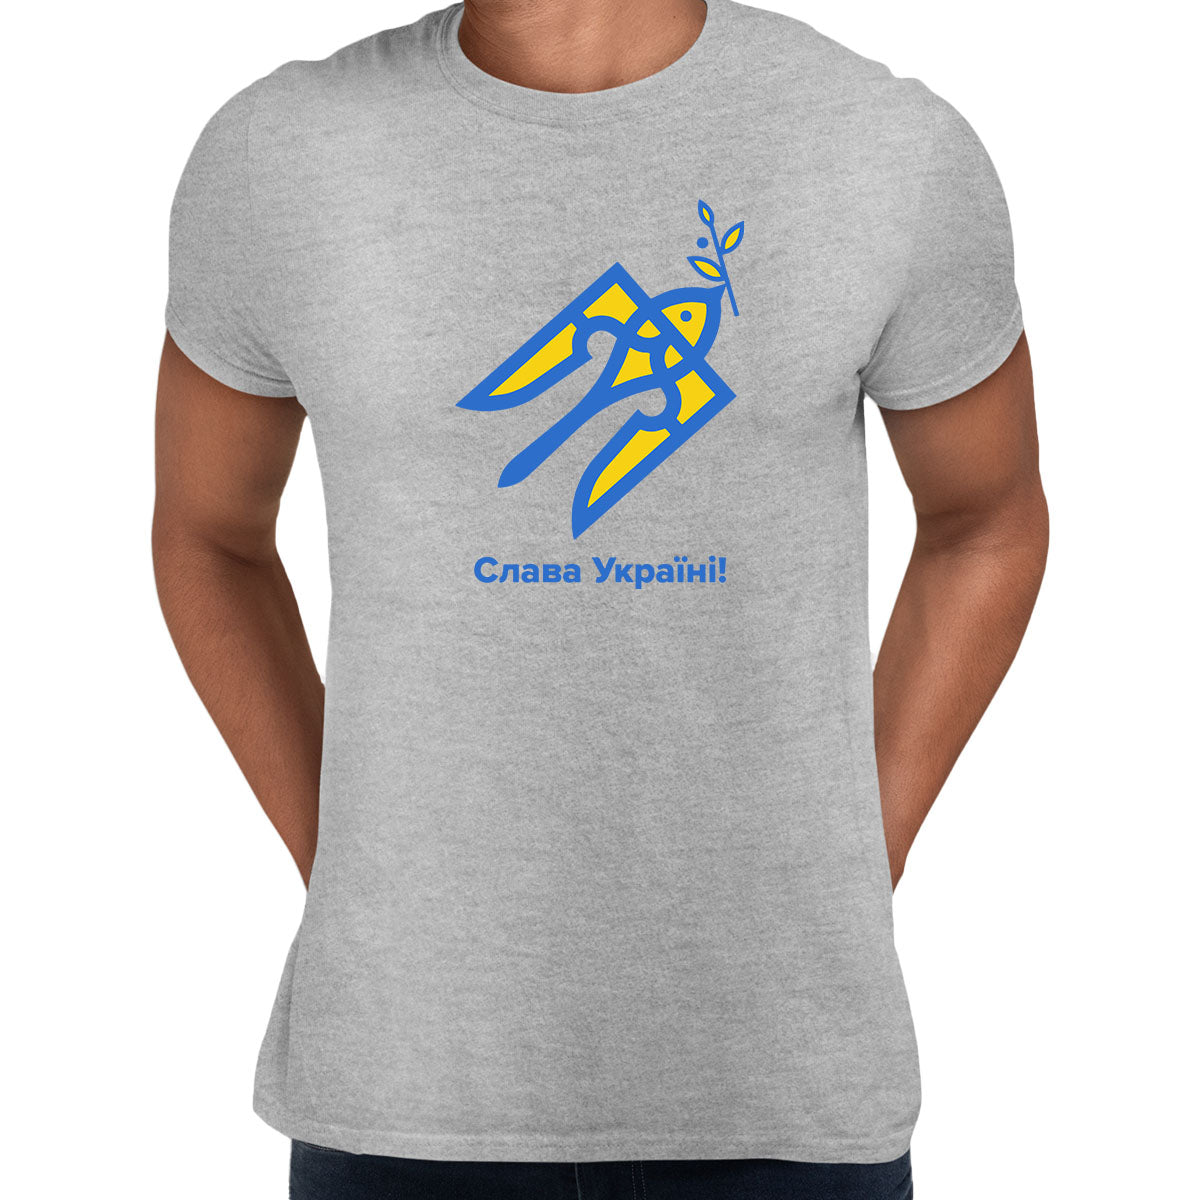 Slava Ukraini Glory Ukraine T-shirt Peace Ukraine War conflict - Kuzi Tees